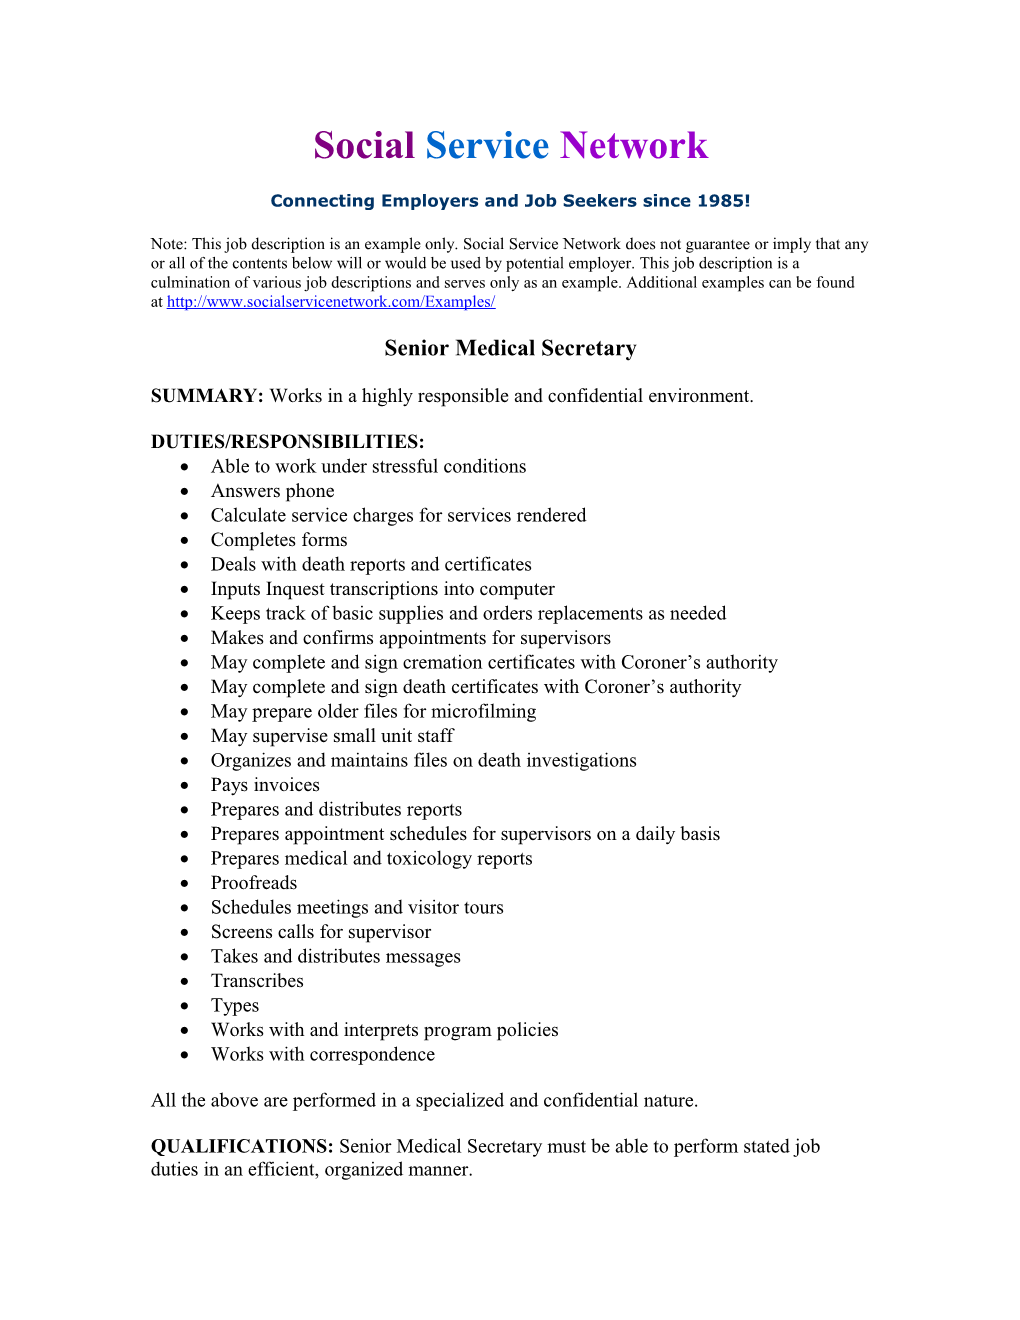 Senior Medical Secretary Sample Job Description Example